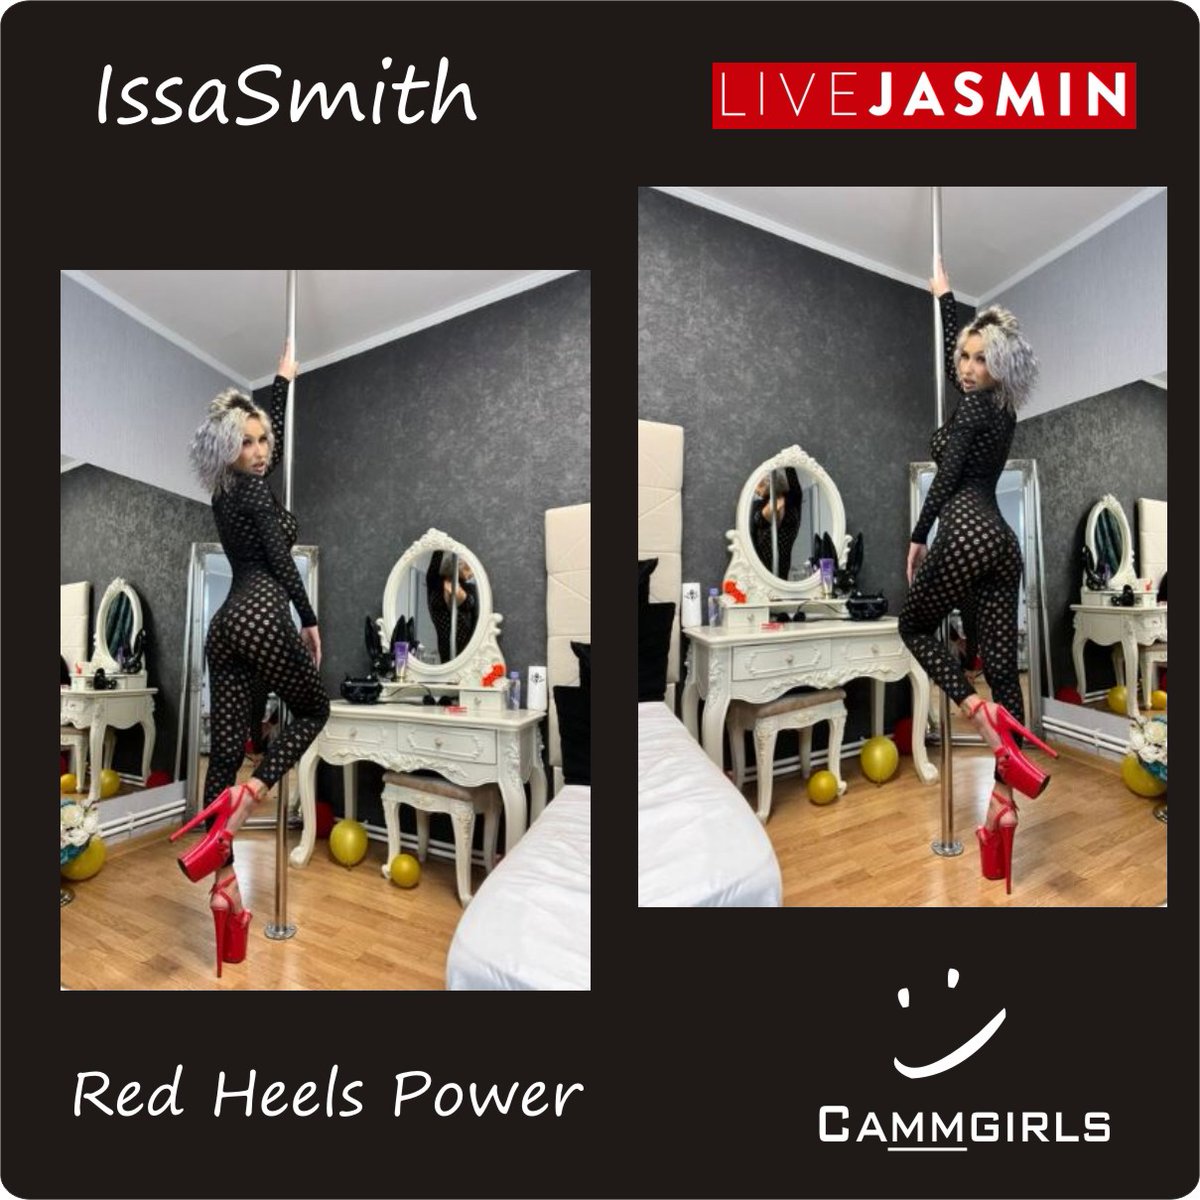 Goddess Mistress Romania IssaSmith  

bit.ly/3VgRf80

#redheels #cammgirls #smilewithconfidence